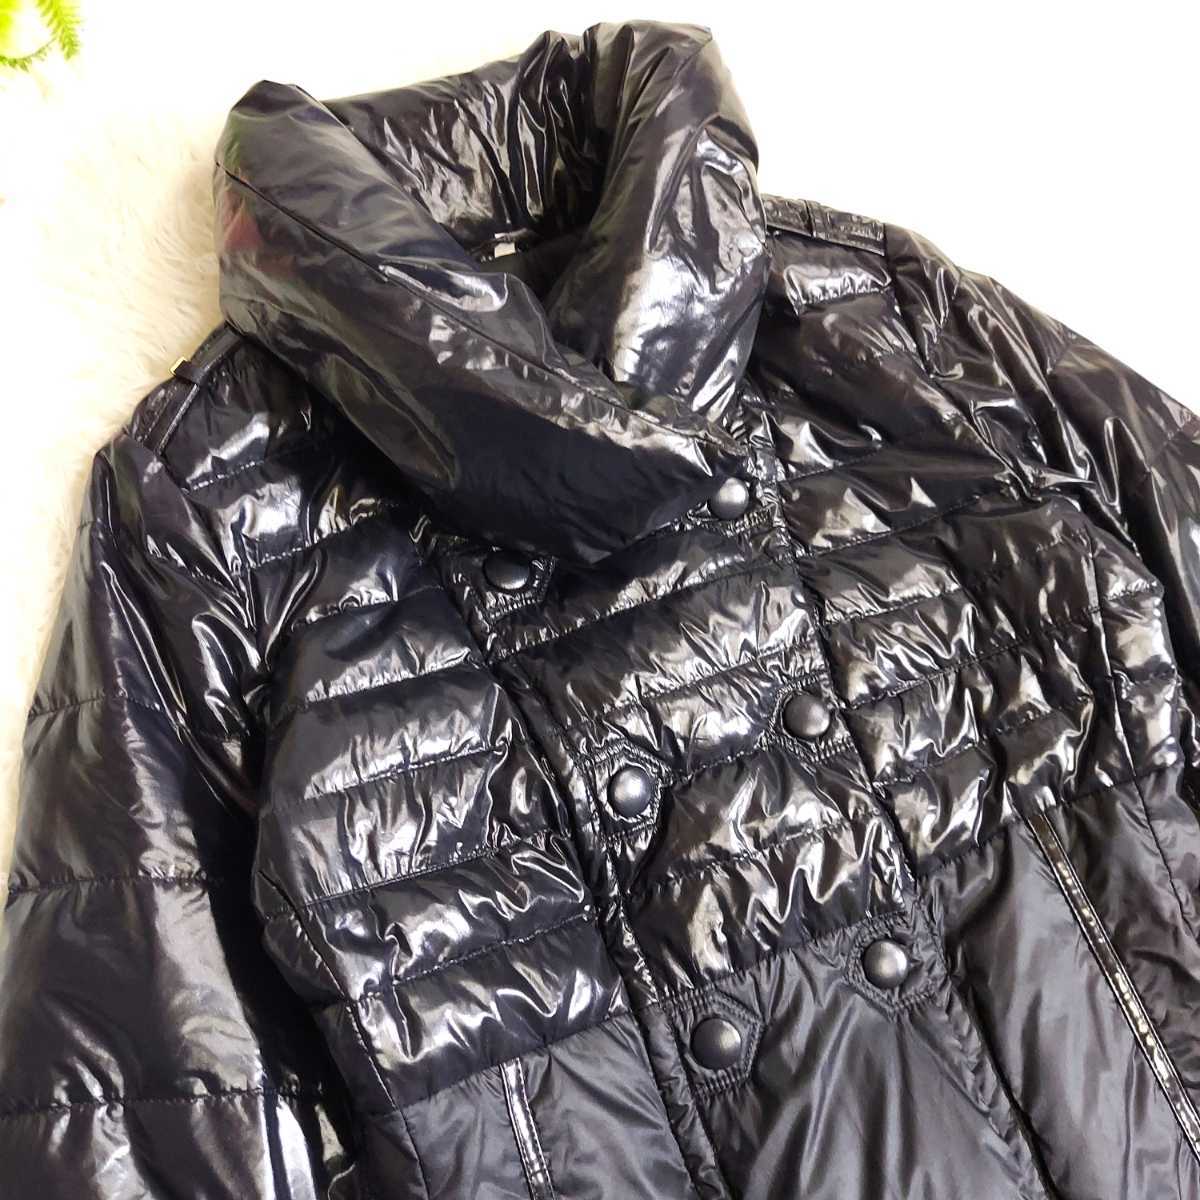 [ free shipping ]chibai white CBY WHITE down jacket black M size corresponding hem flair A line Roo mania made 81589